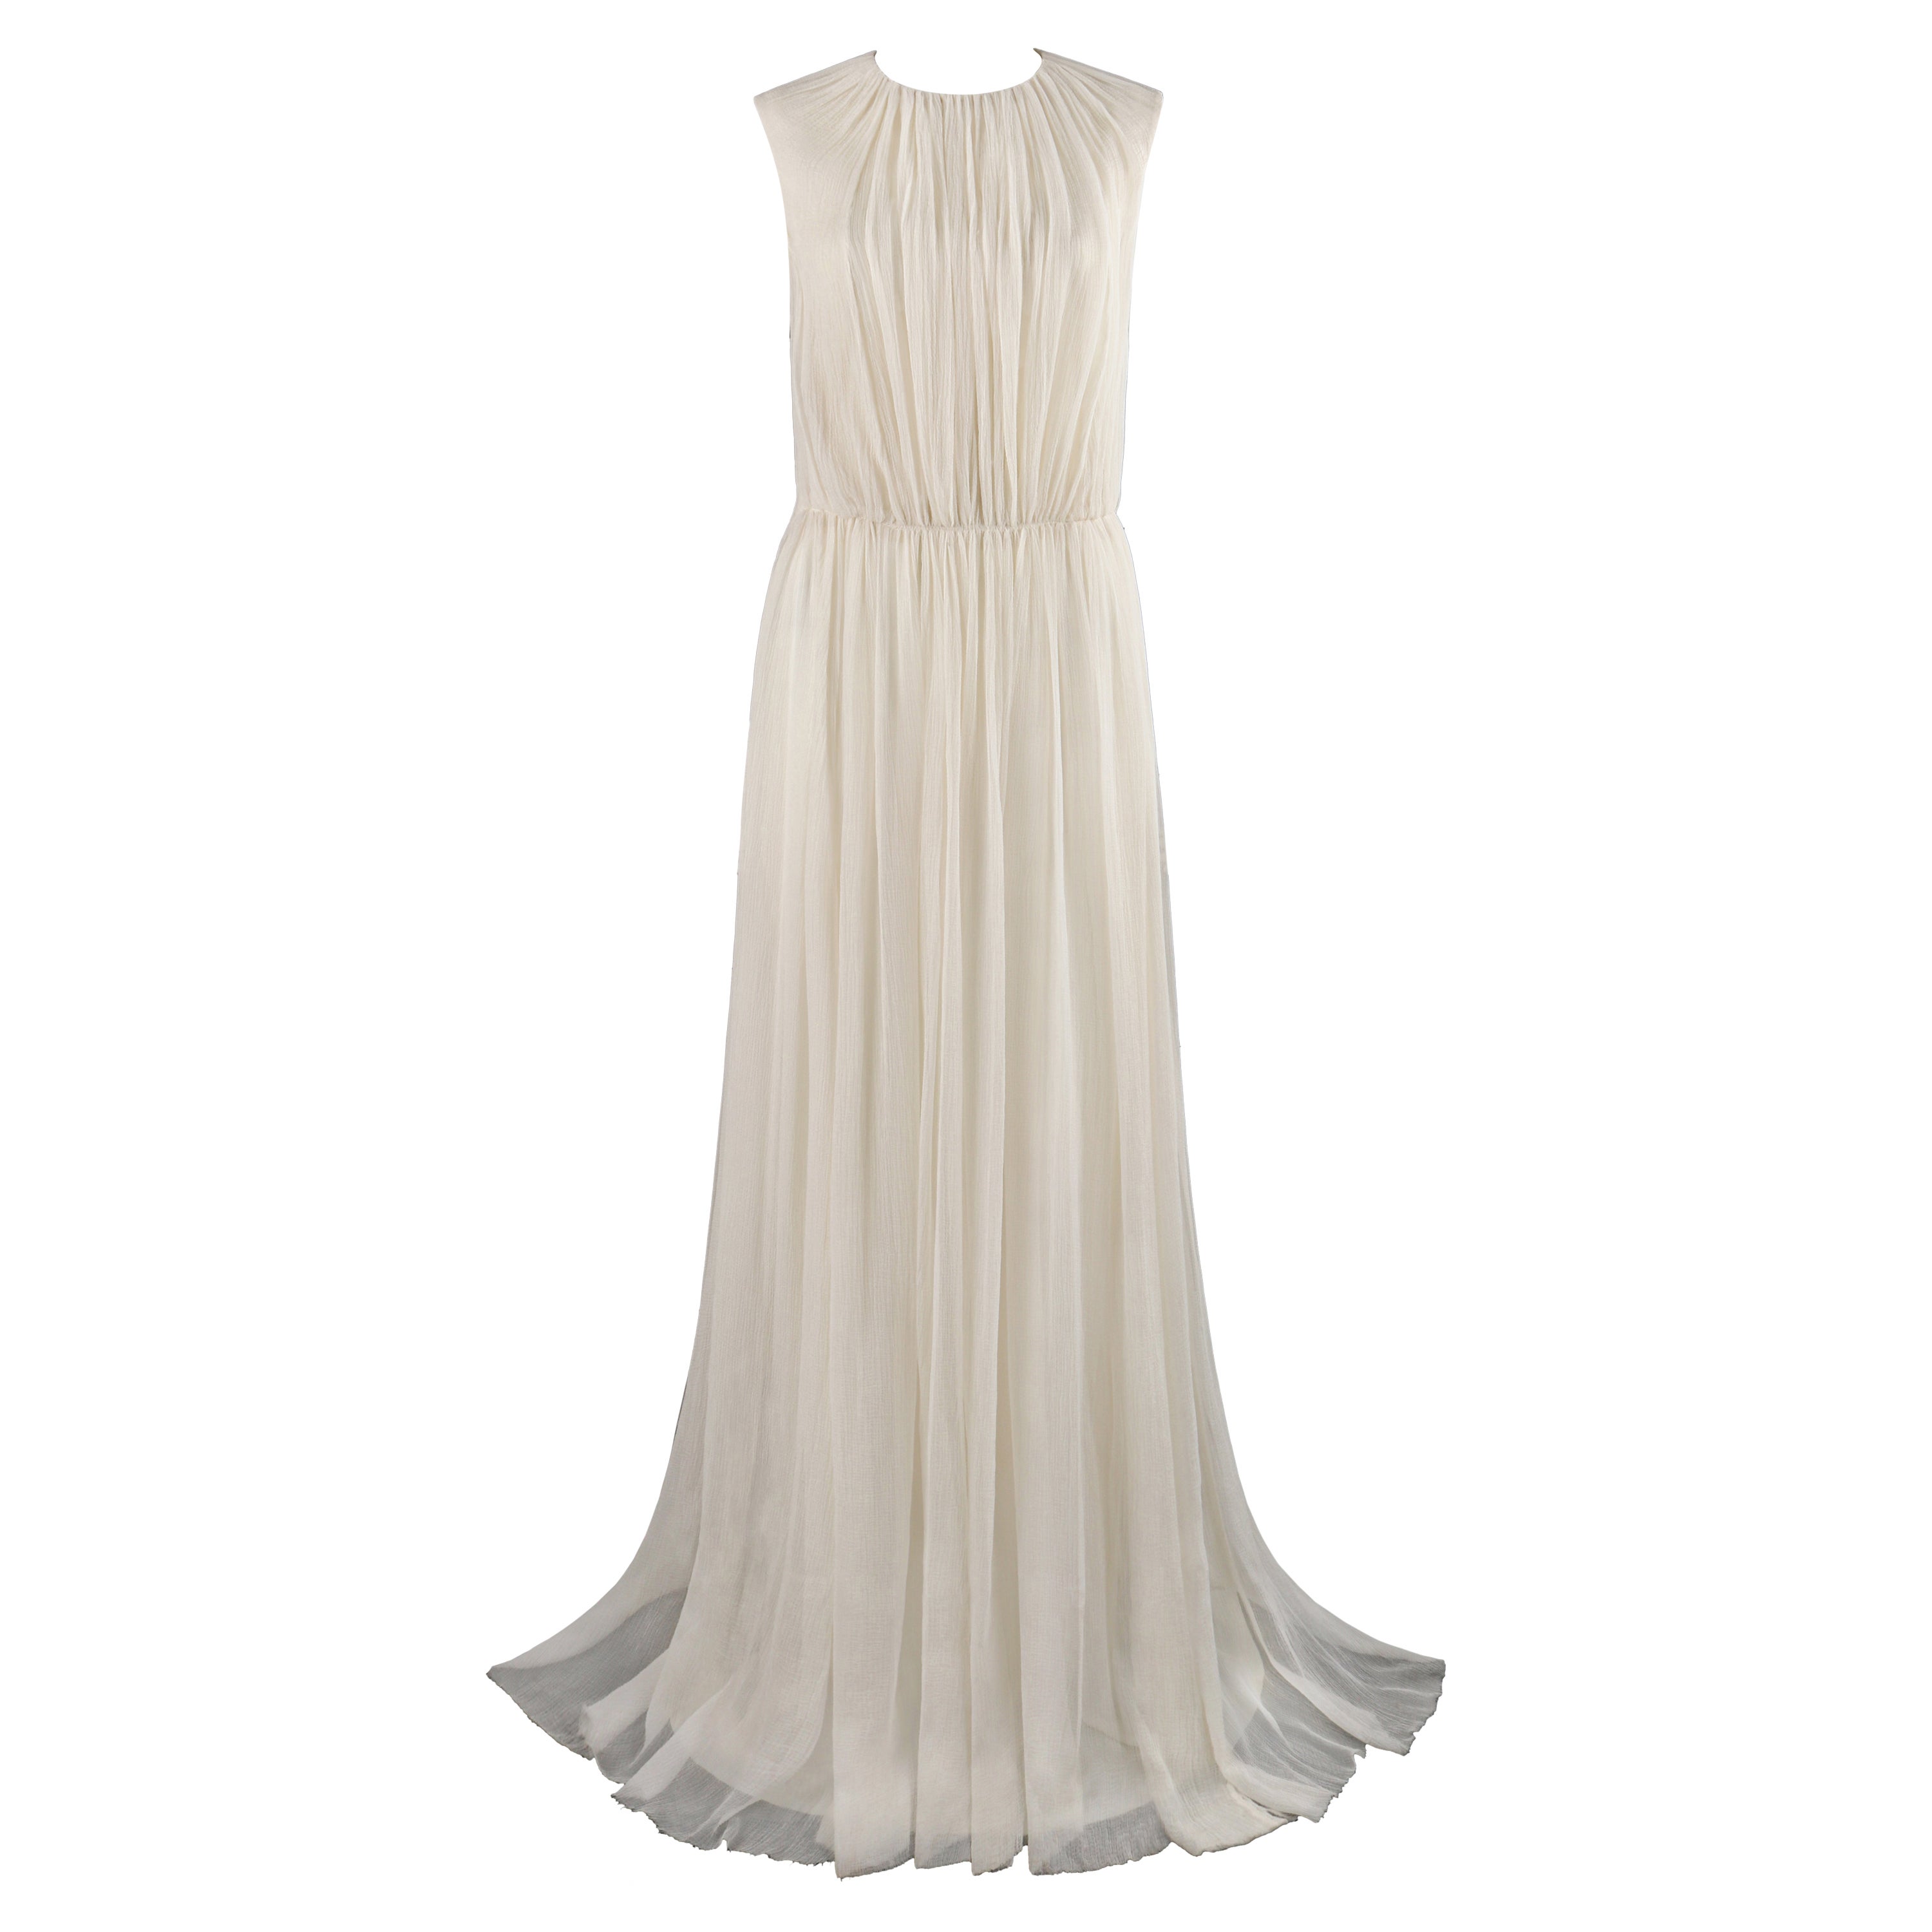 ALEXANDER McQUEEN S/S 2007 Ivory Silk Chiffon Full Length Ballgown Dress Gown For Sale